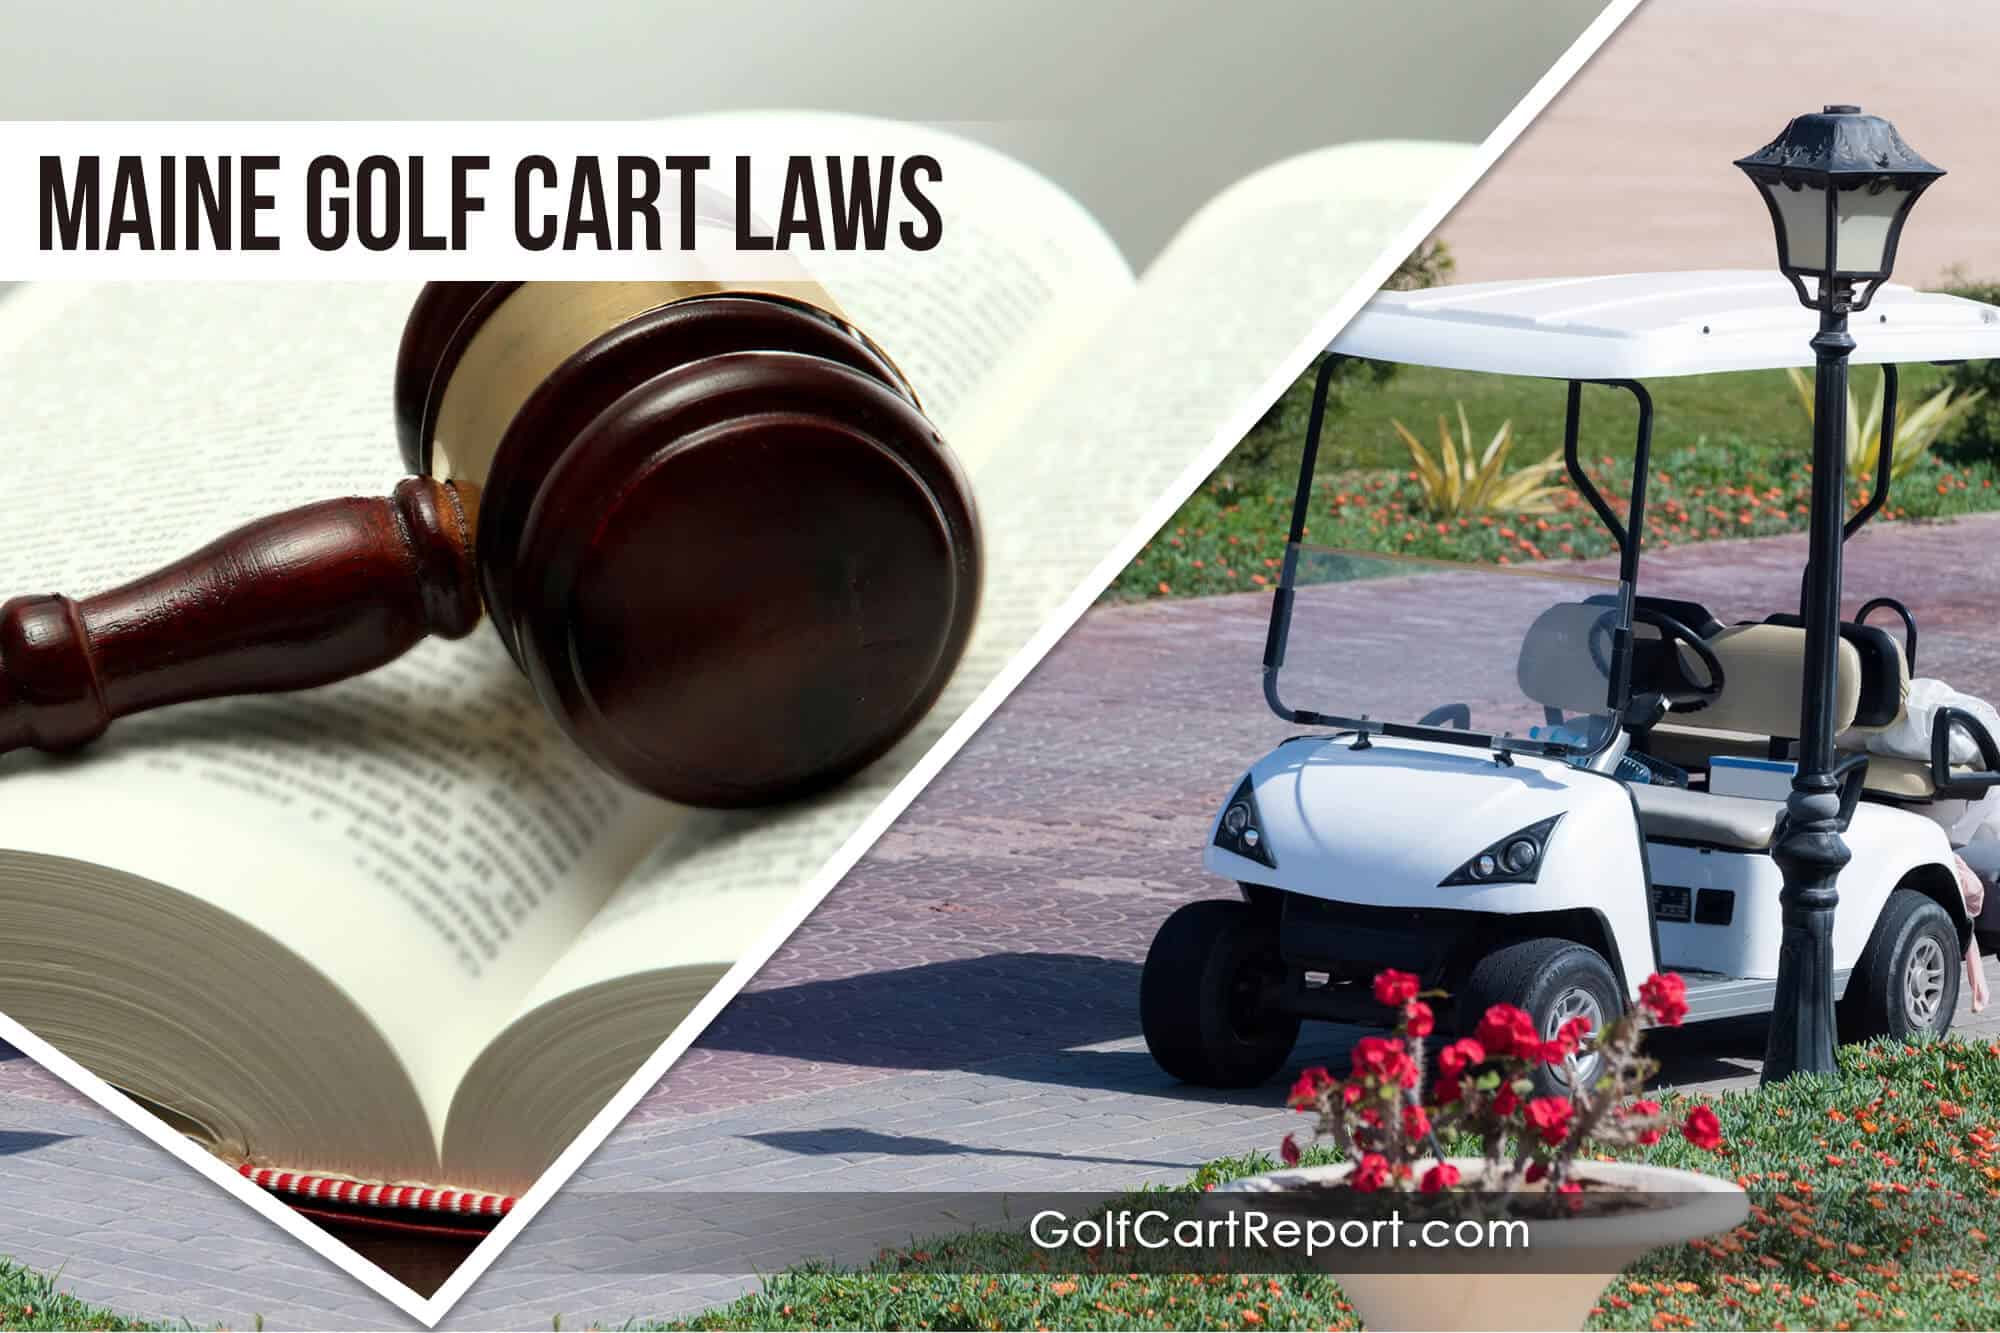 Maine golf cart laws